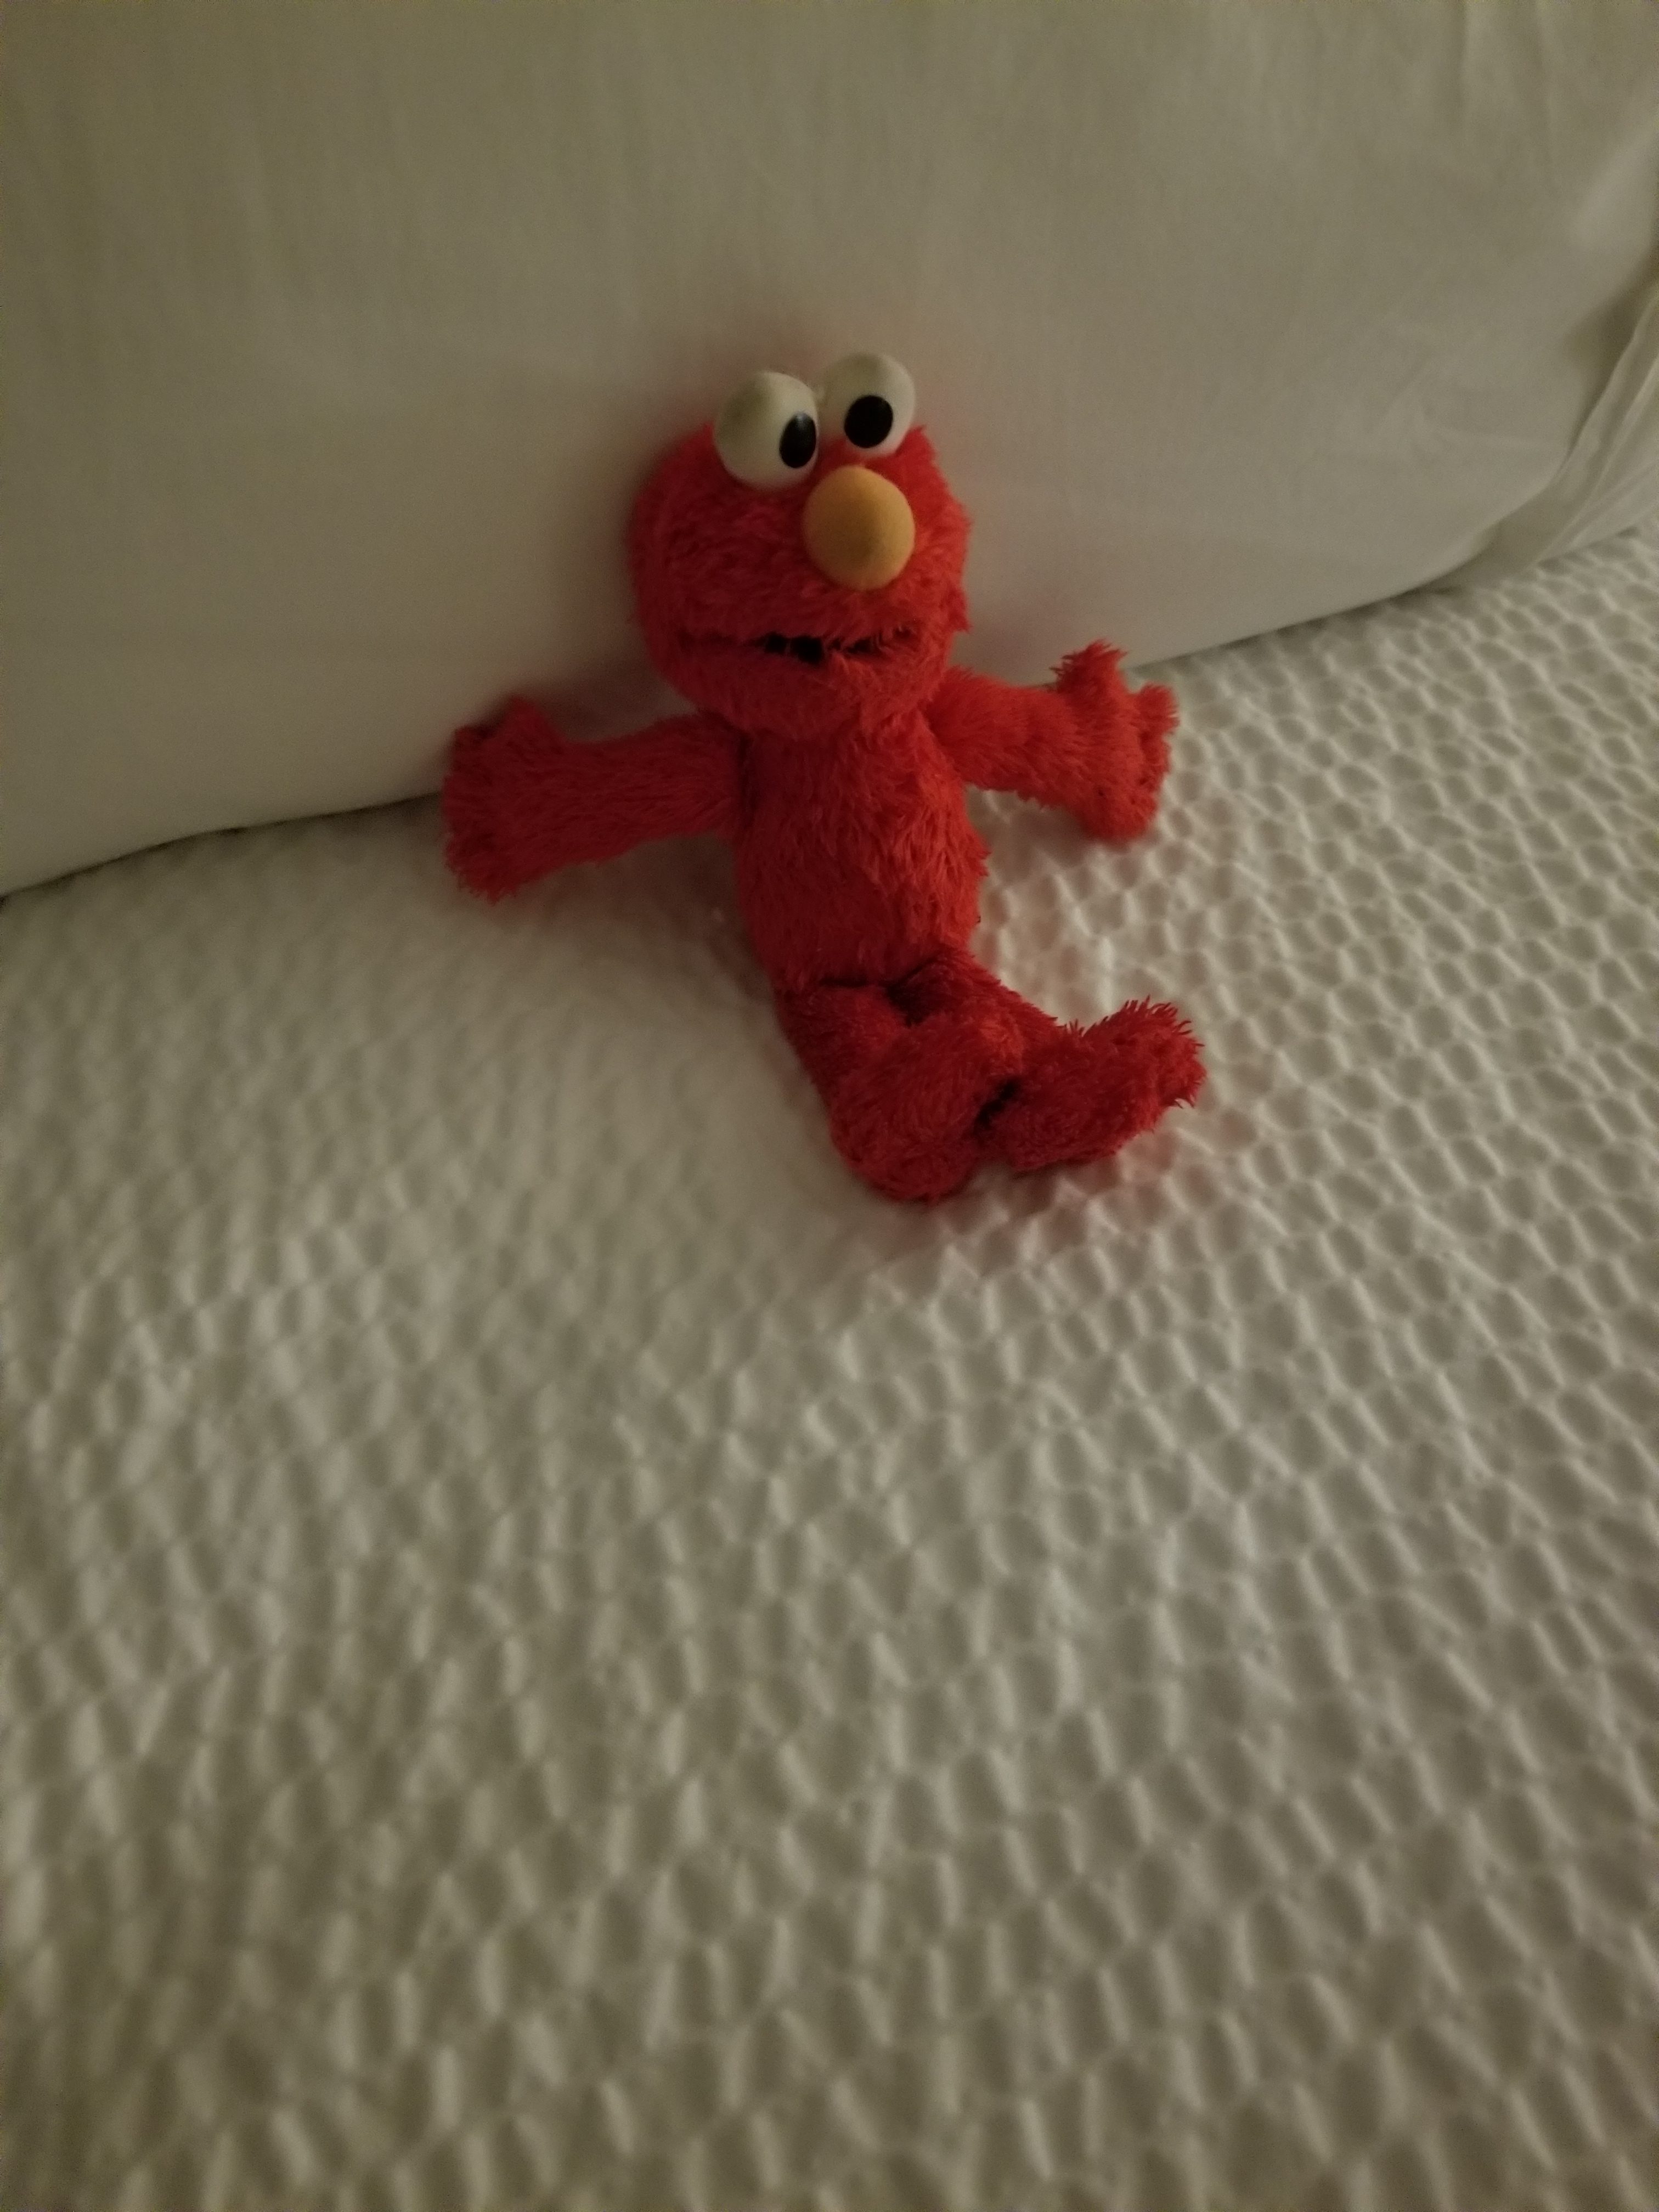 Elmo Settles Down a Little